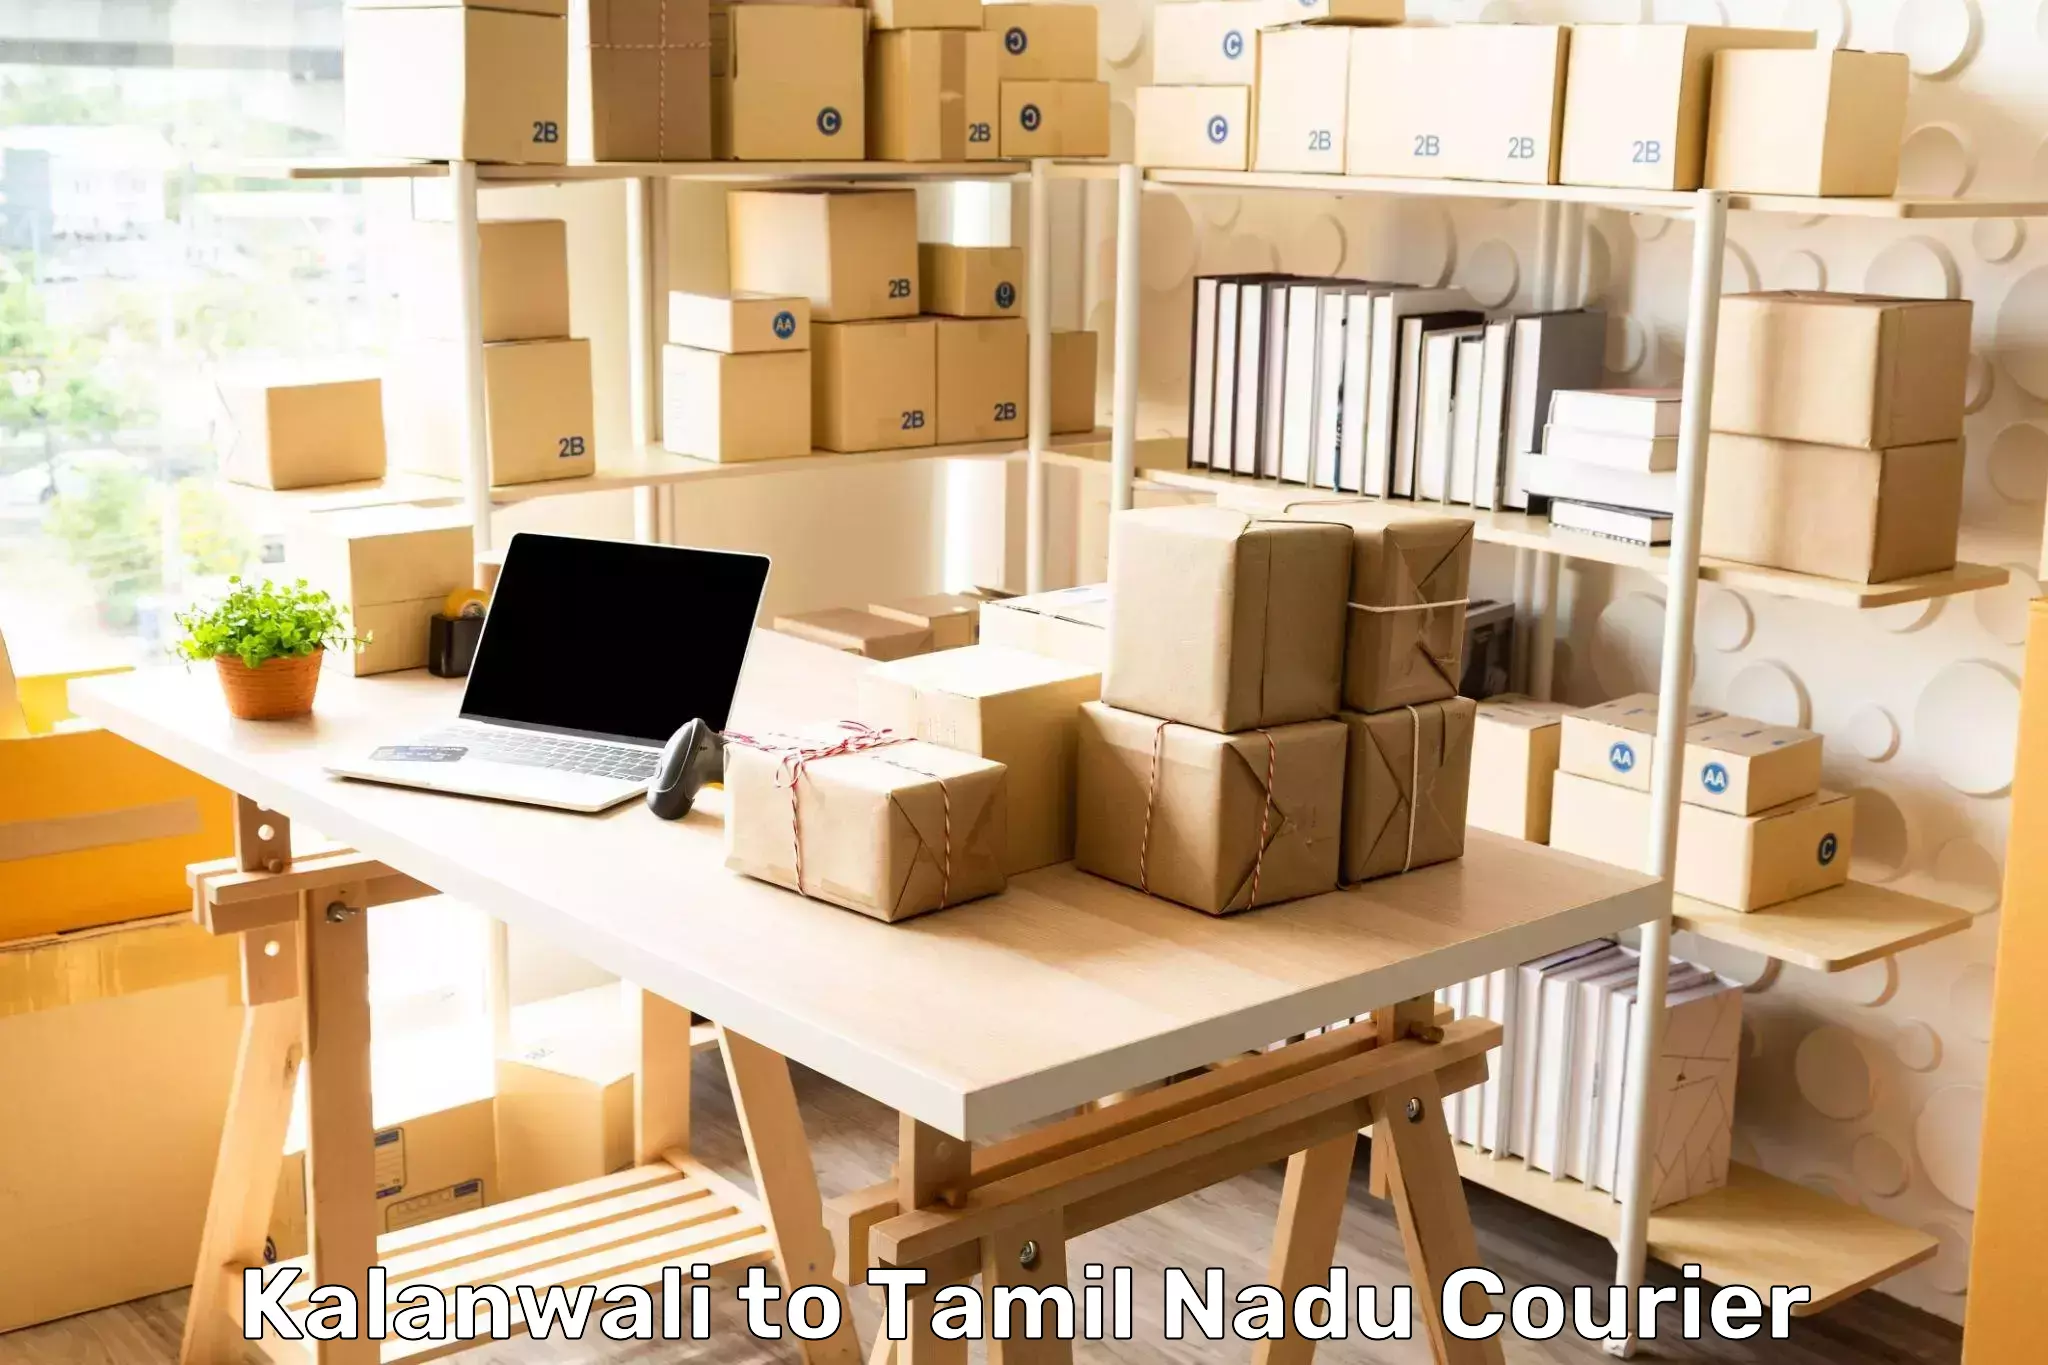 Courier service innovation Kalanwali to Tamil Nadu